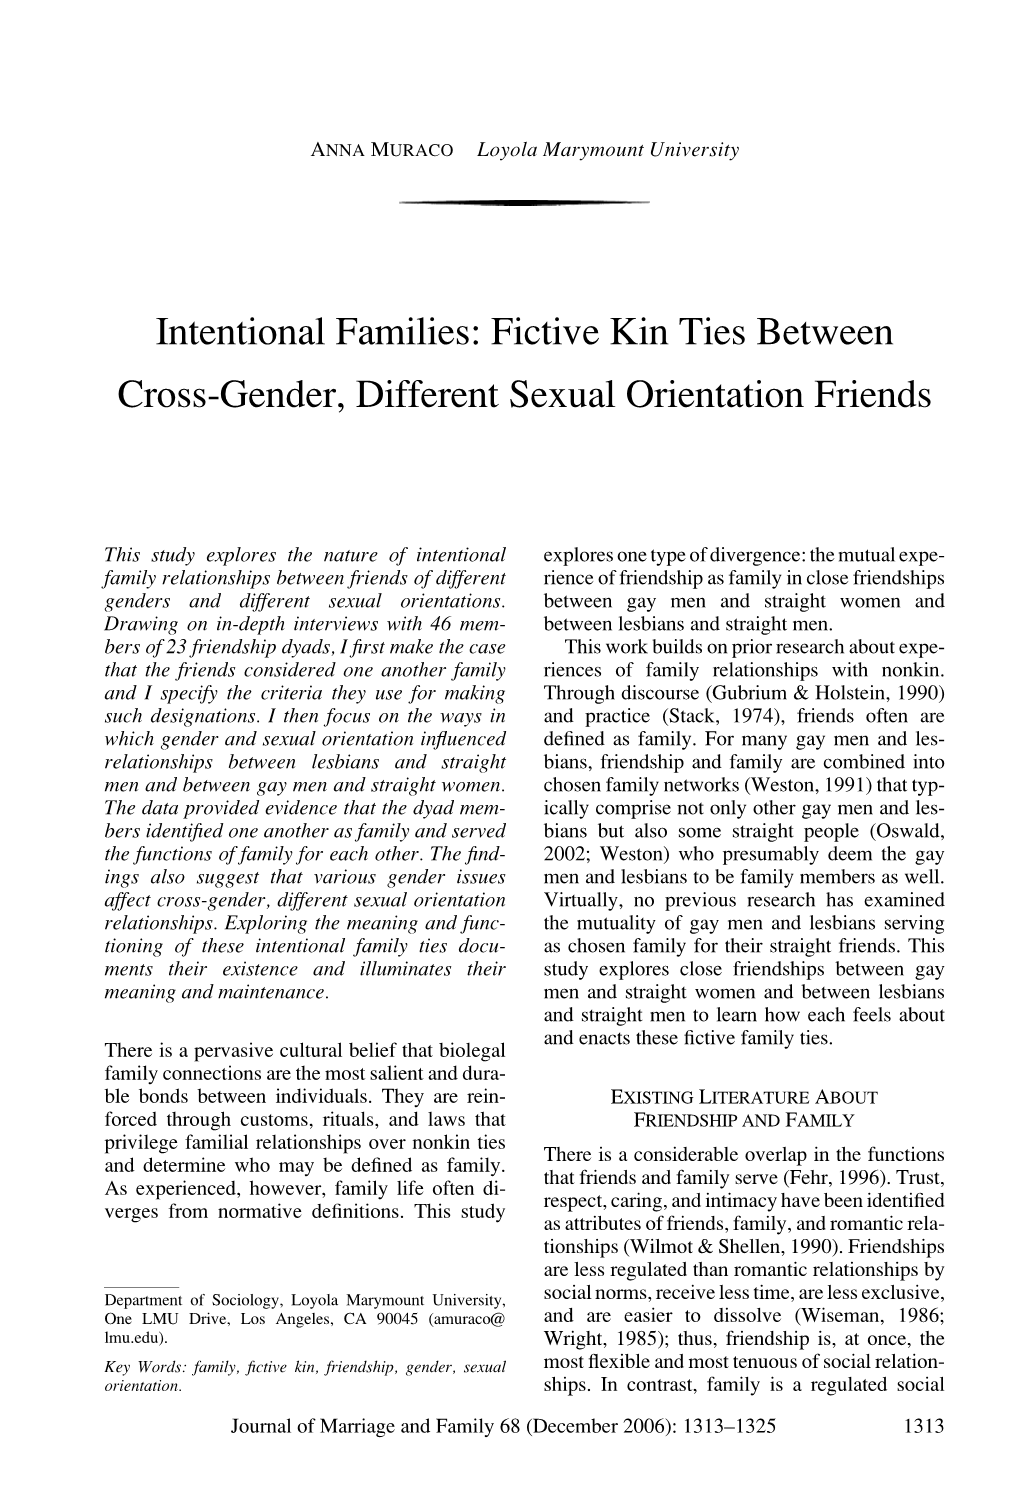 Intentional Families: Fictive Kin Ties Between Cross-Gender, Different Sexual Orientation Friends